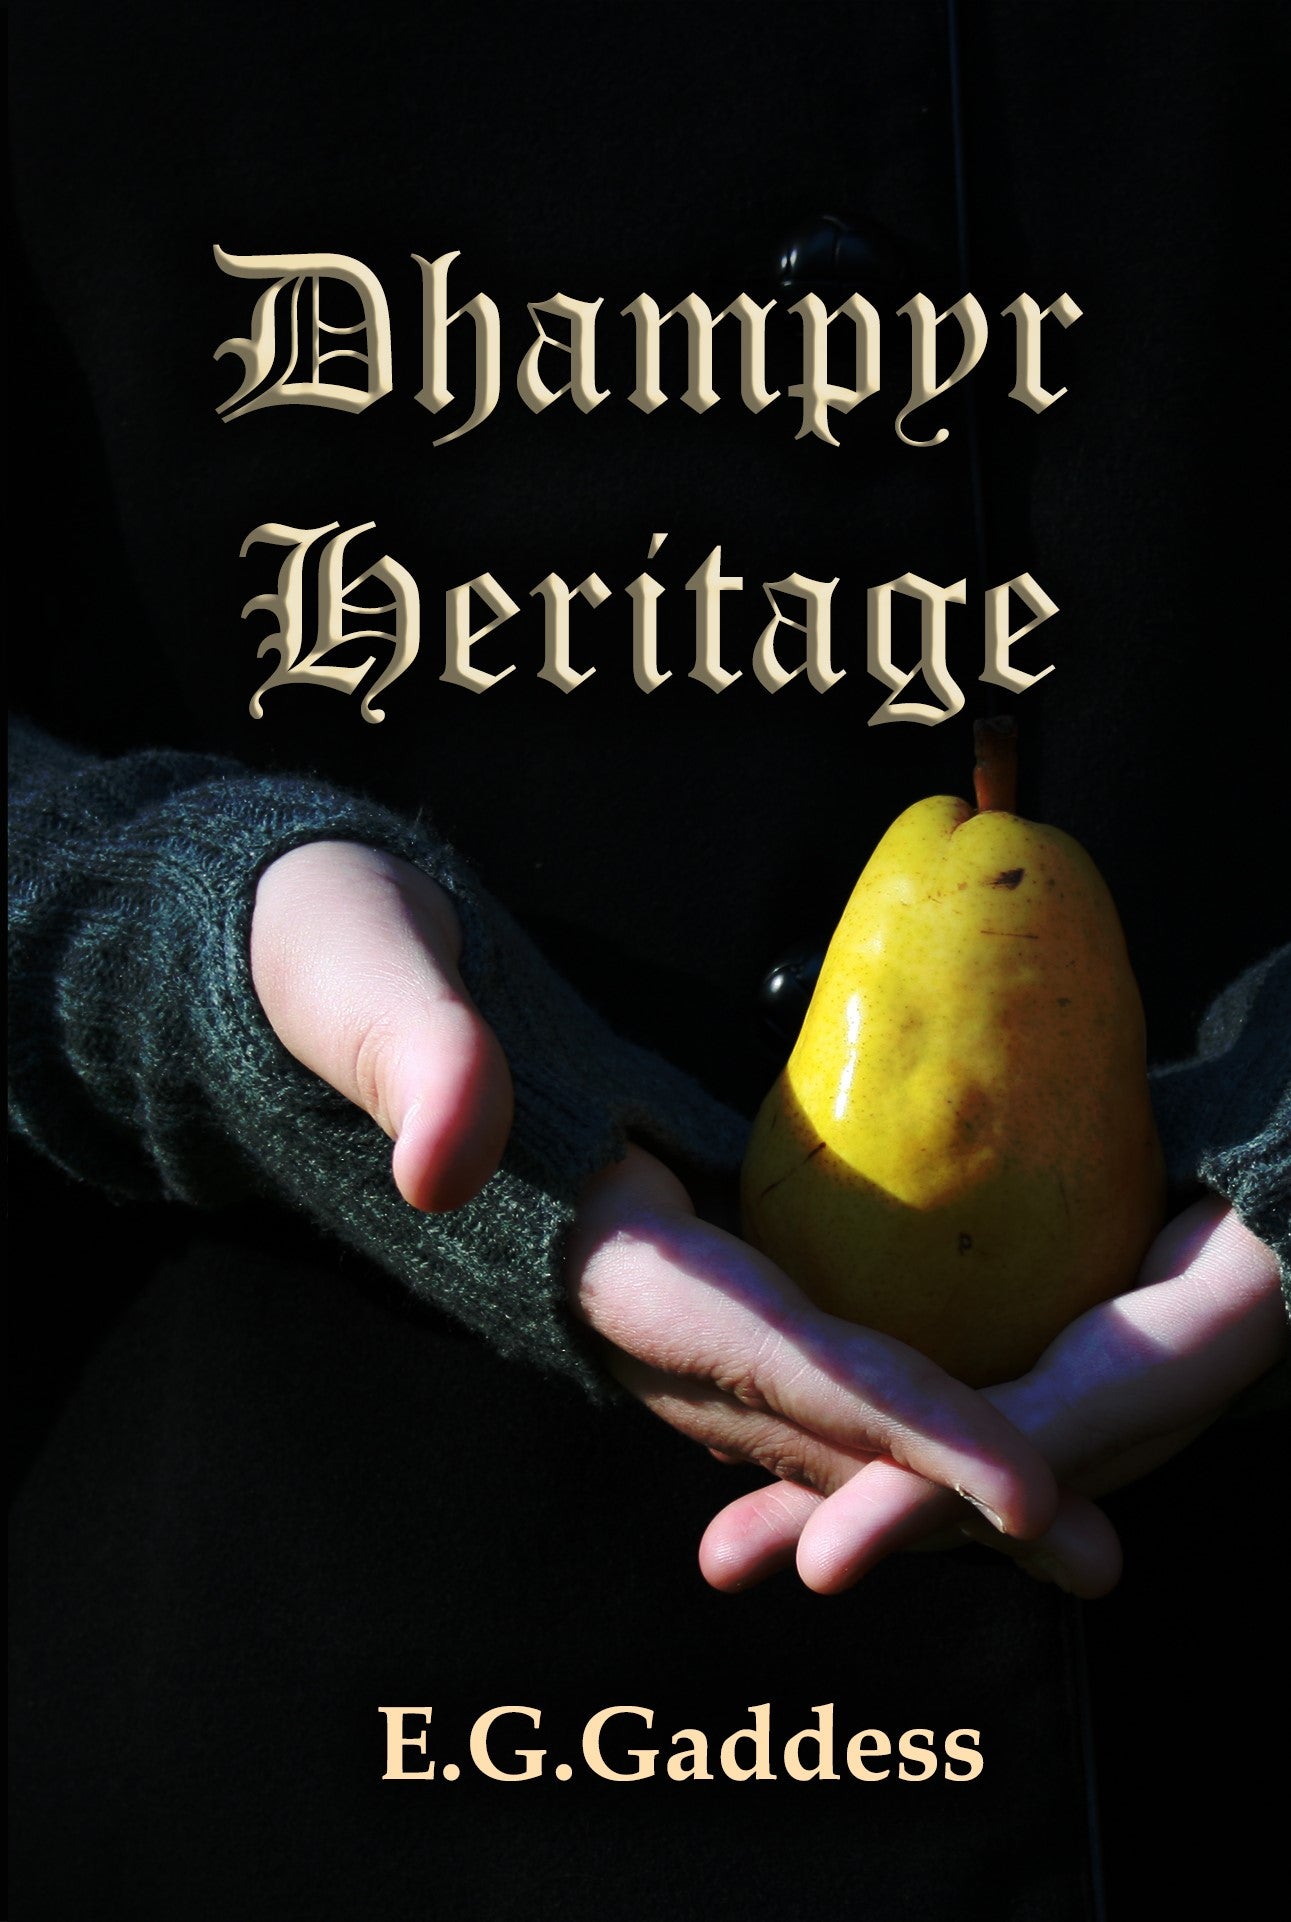 Dhampyr Heritage - Trade Paperback